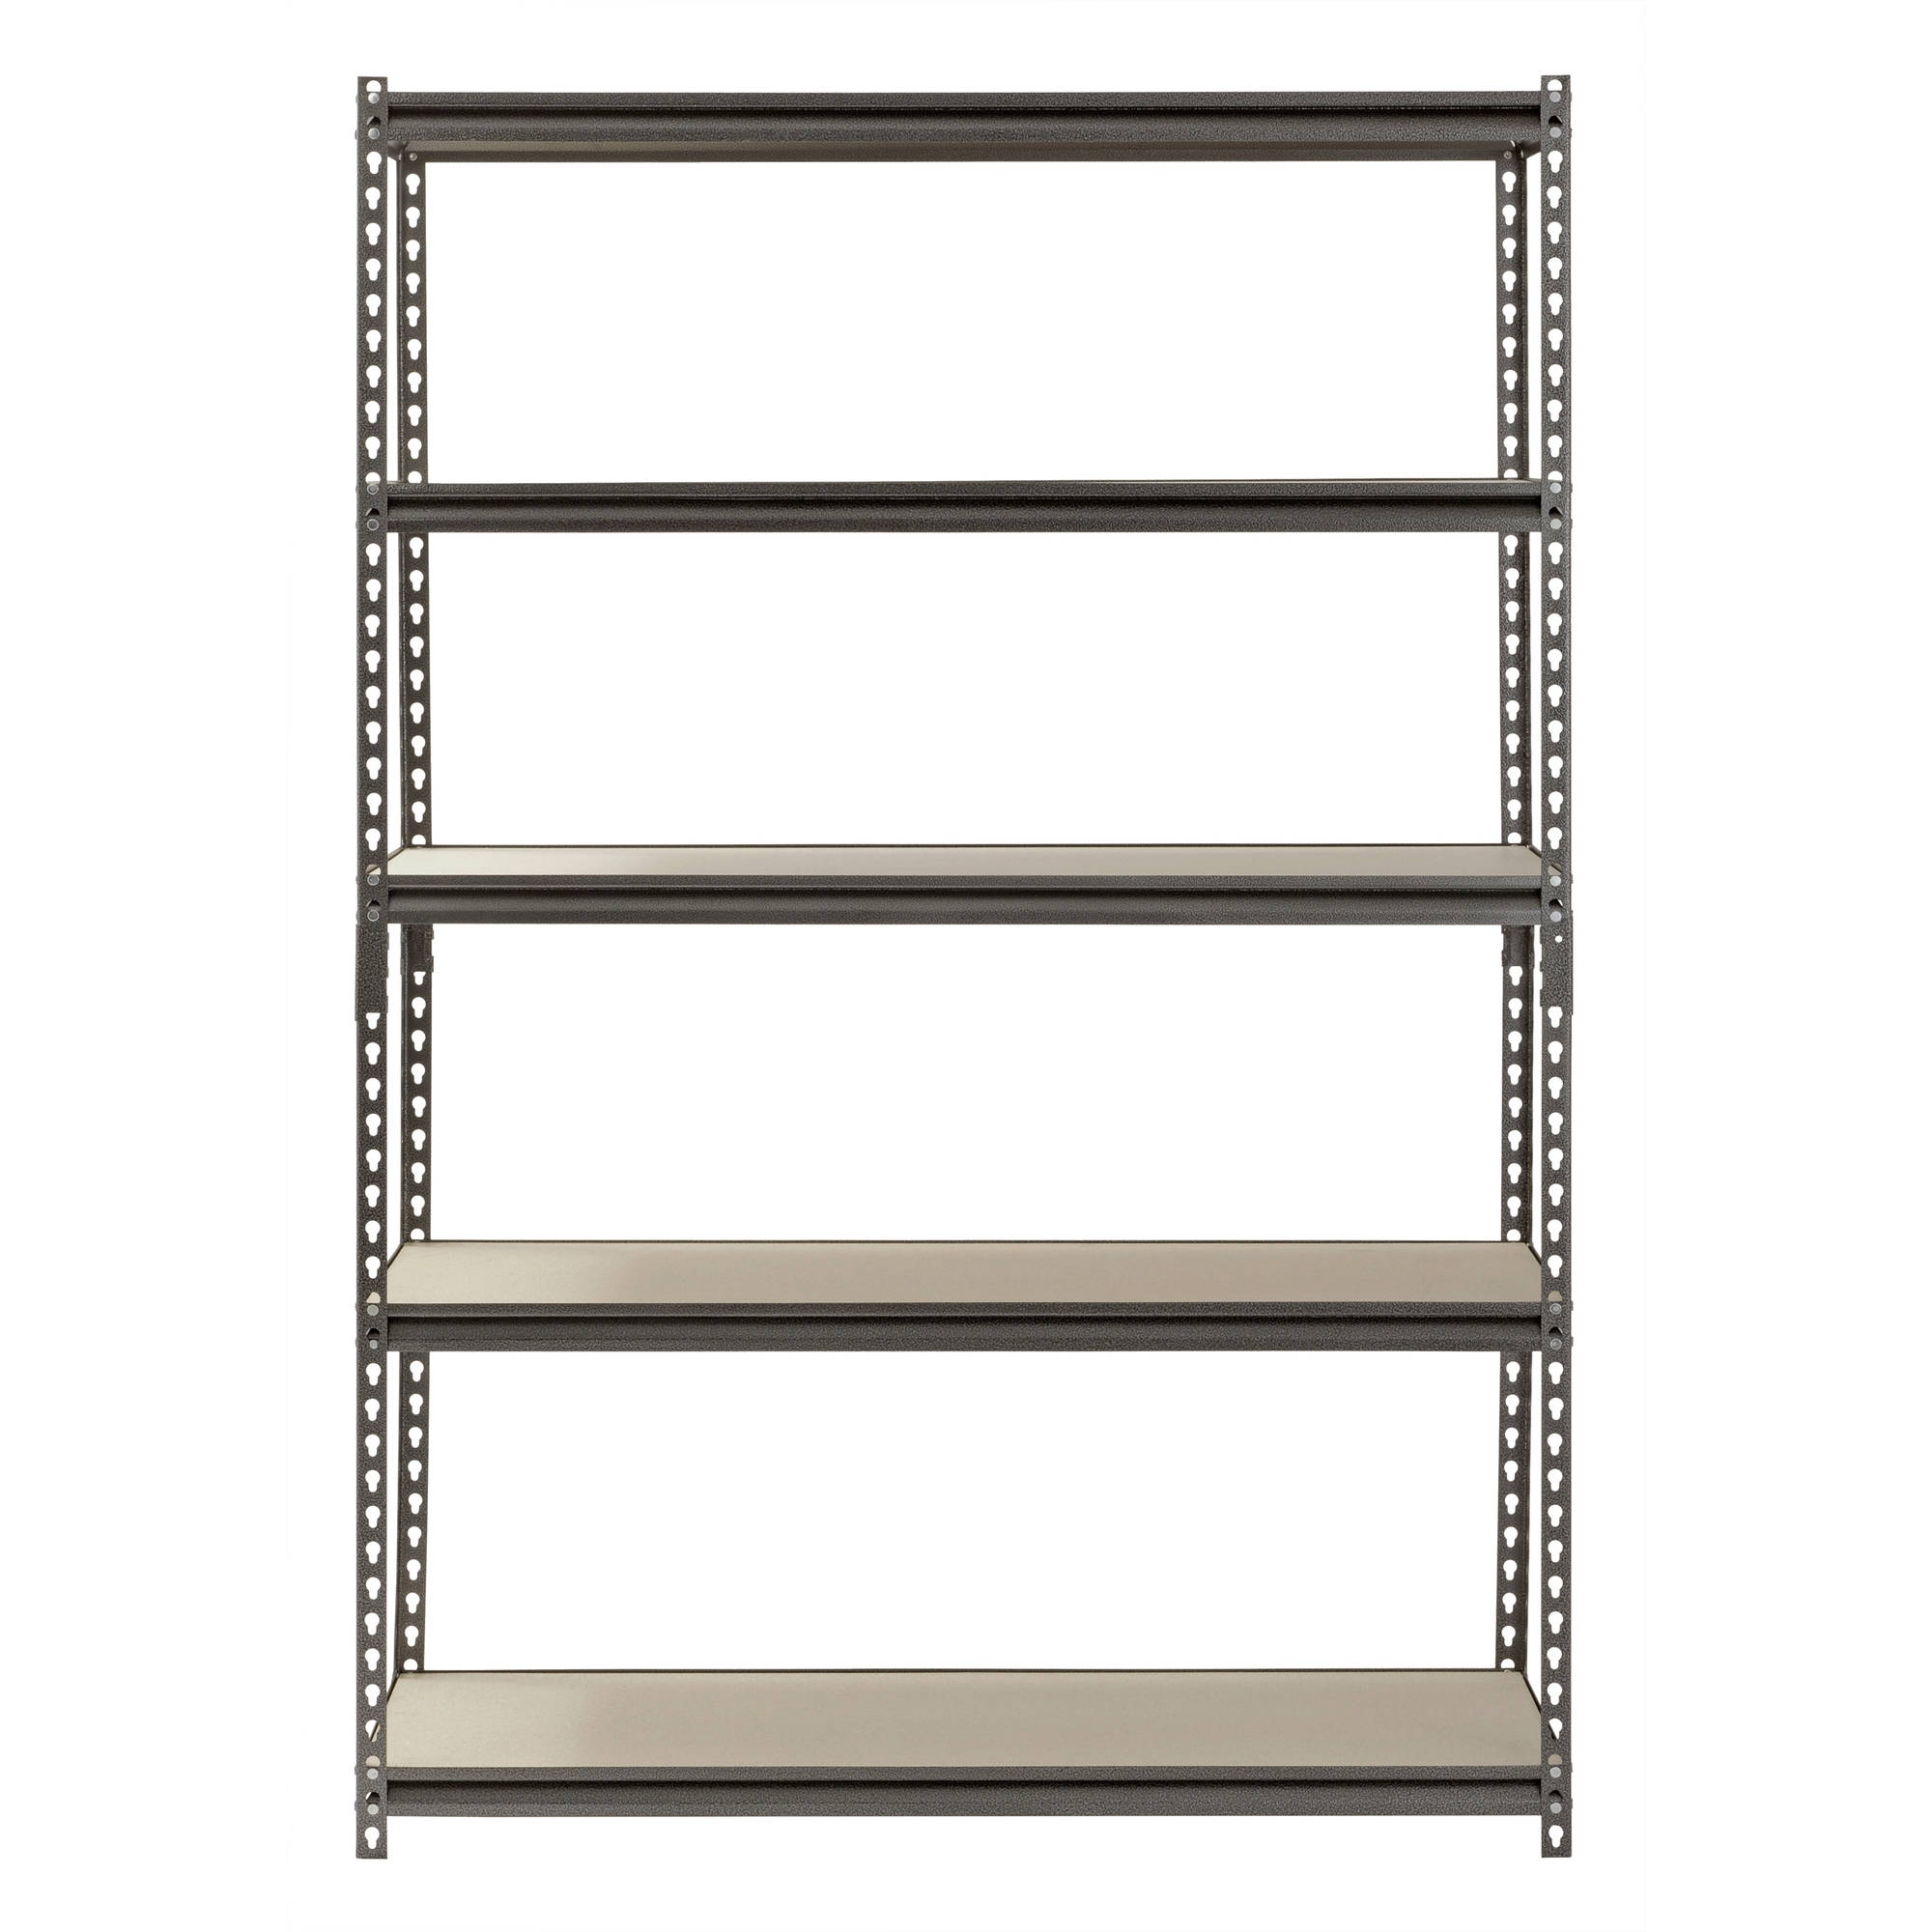 Muscle Rack 48"W x 18"D x 72"H 5-Shelf Steel Freestanding Shelves, Silver - image 2 of 7